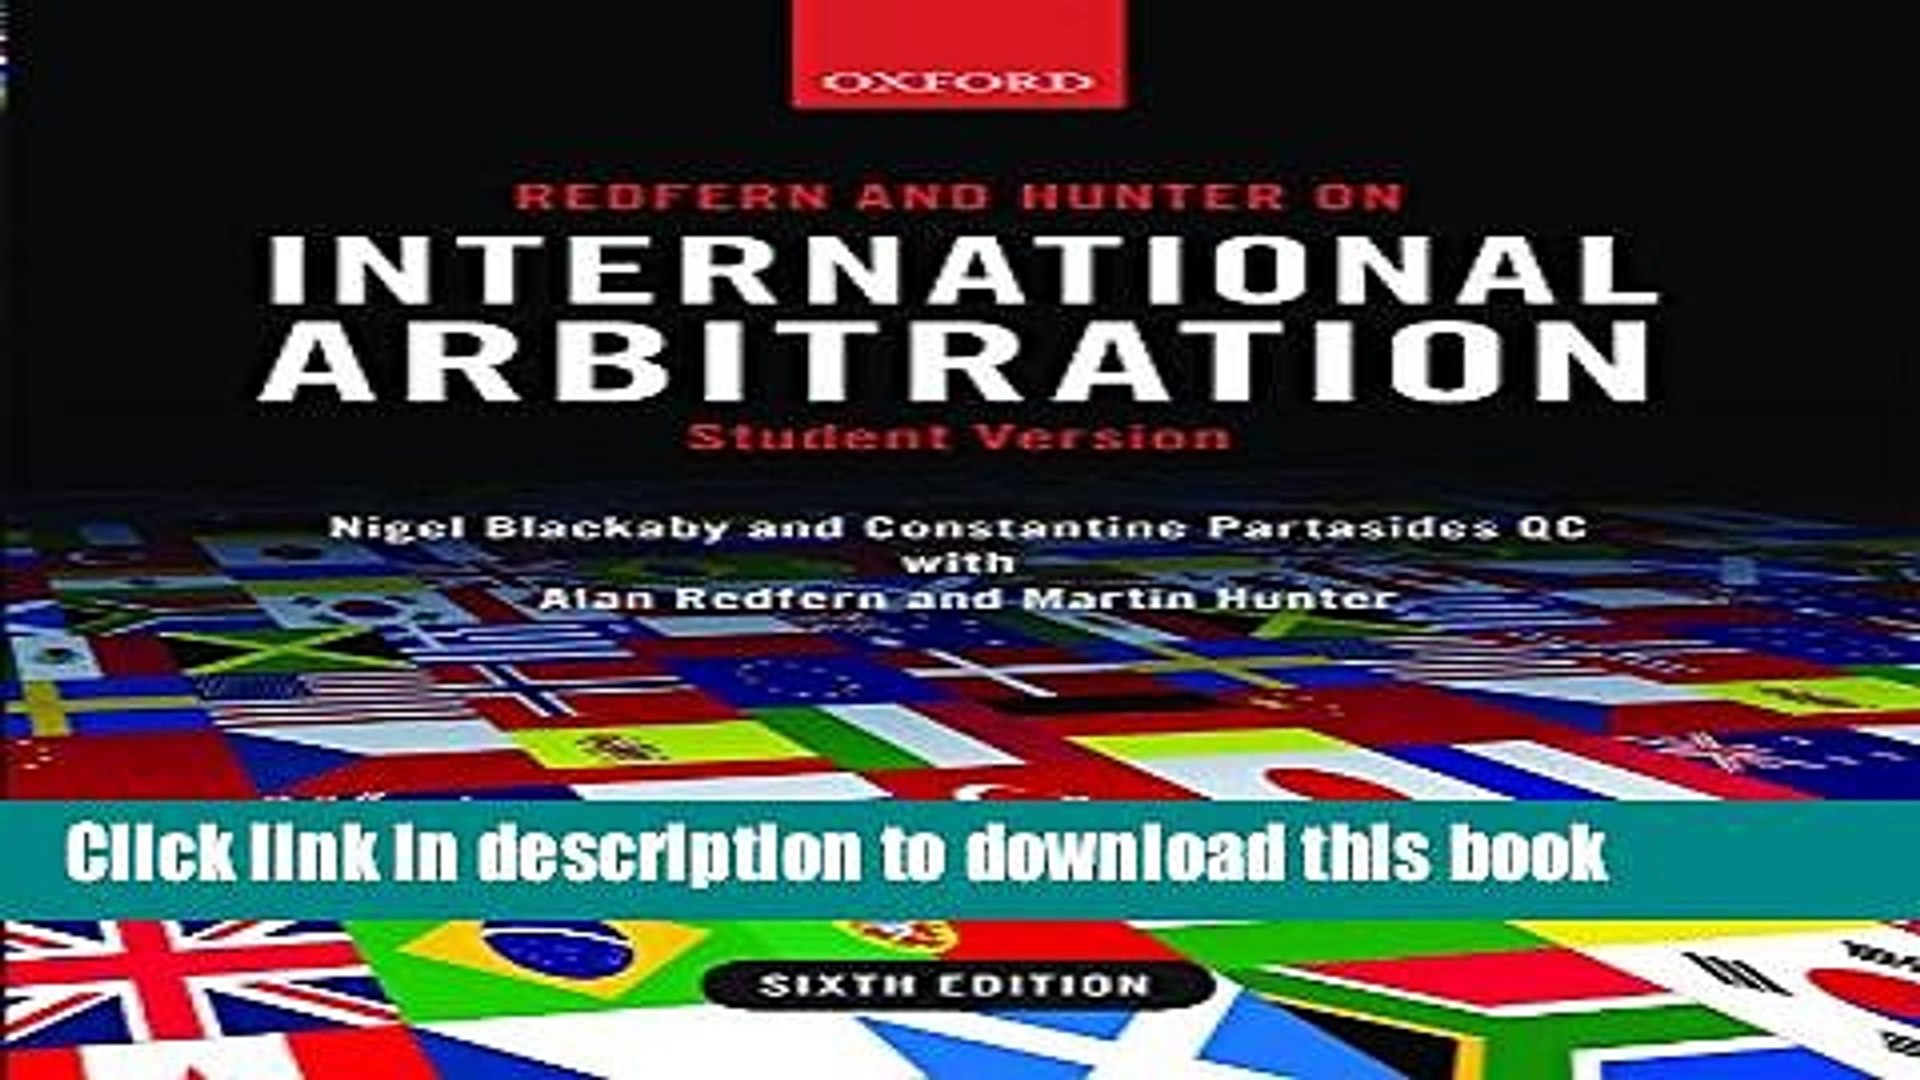 Redfern And Hunter On International Arbitration Student Version Pdf